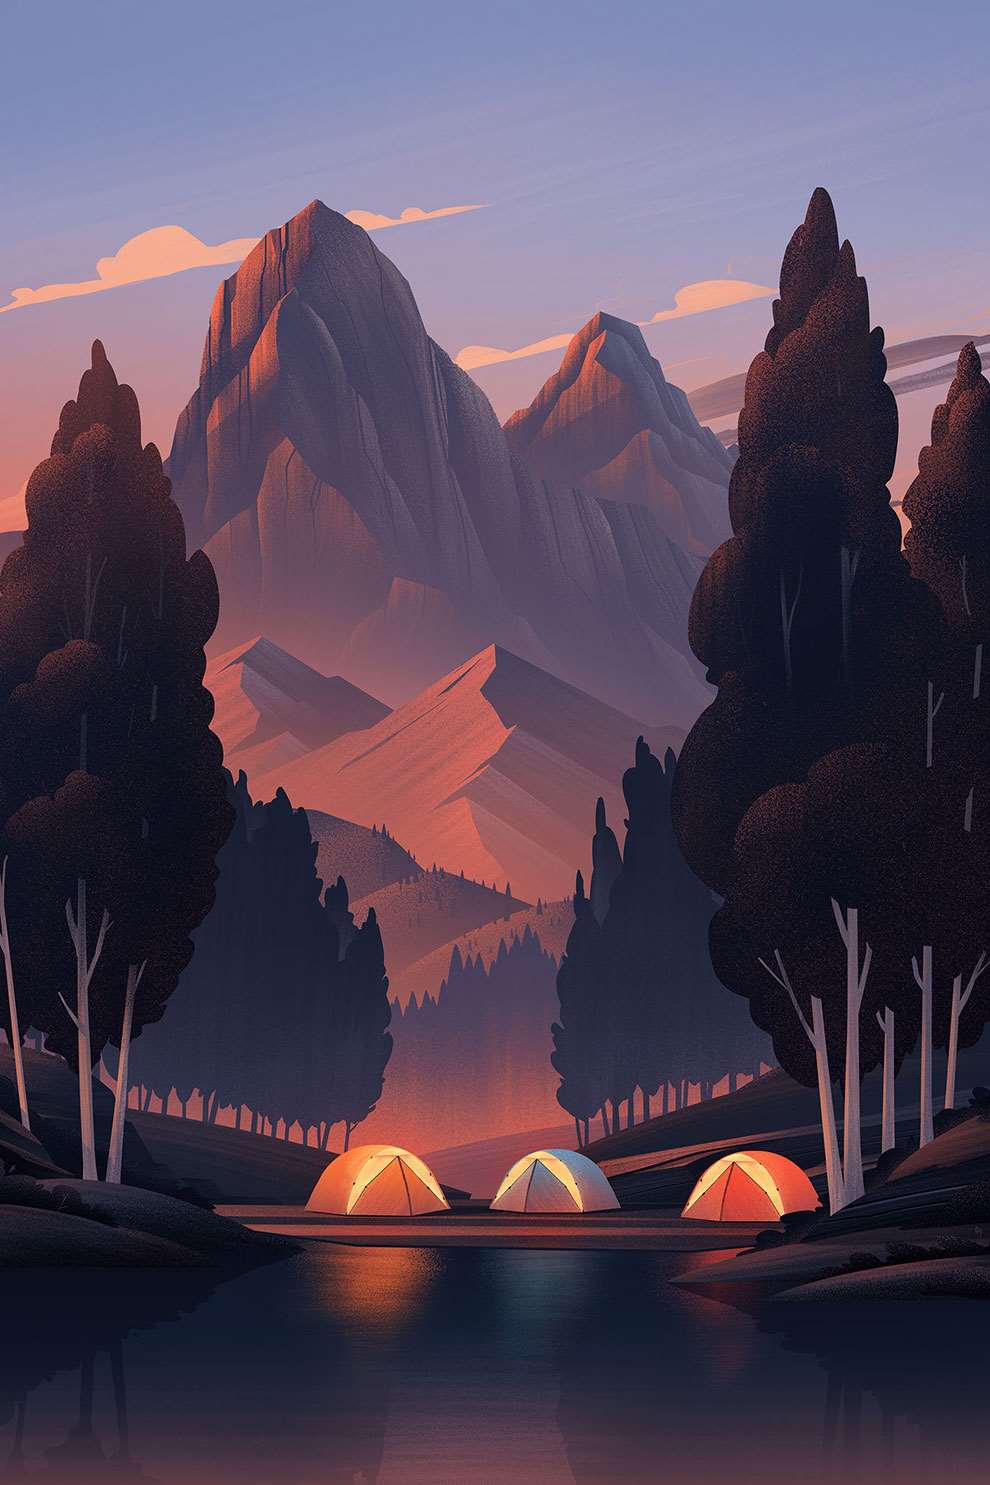 Brian Edward Miller, Nostalgic warm digital illustration of 3 camping tents lit up near the mountains, landscape background.